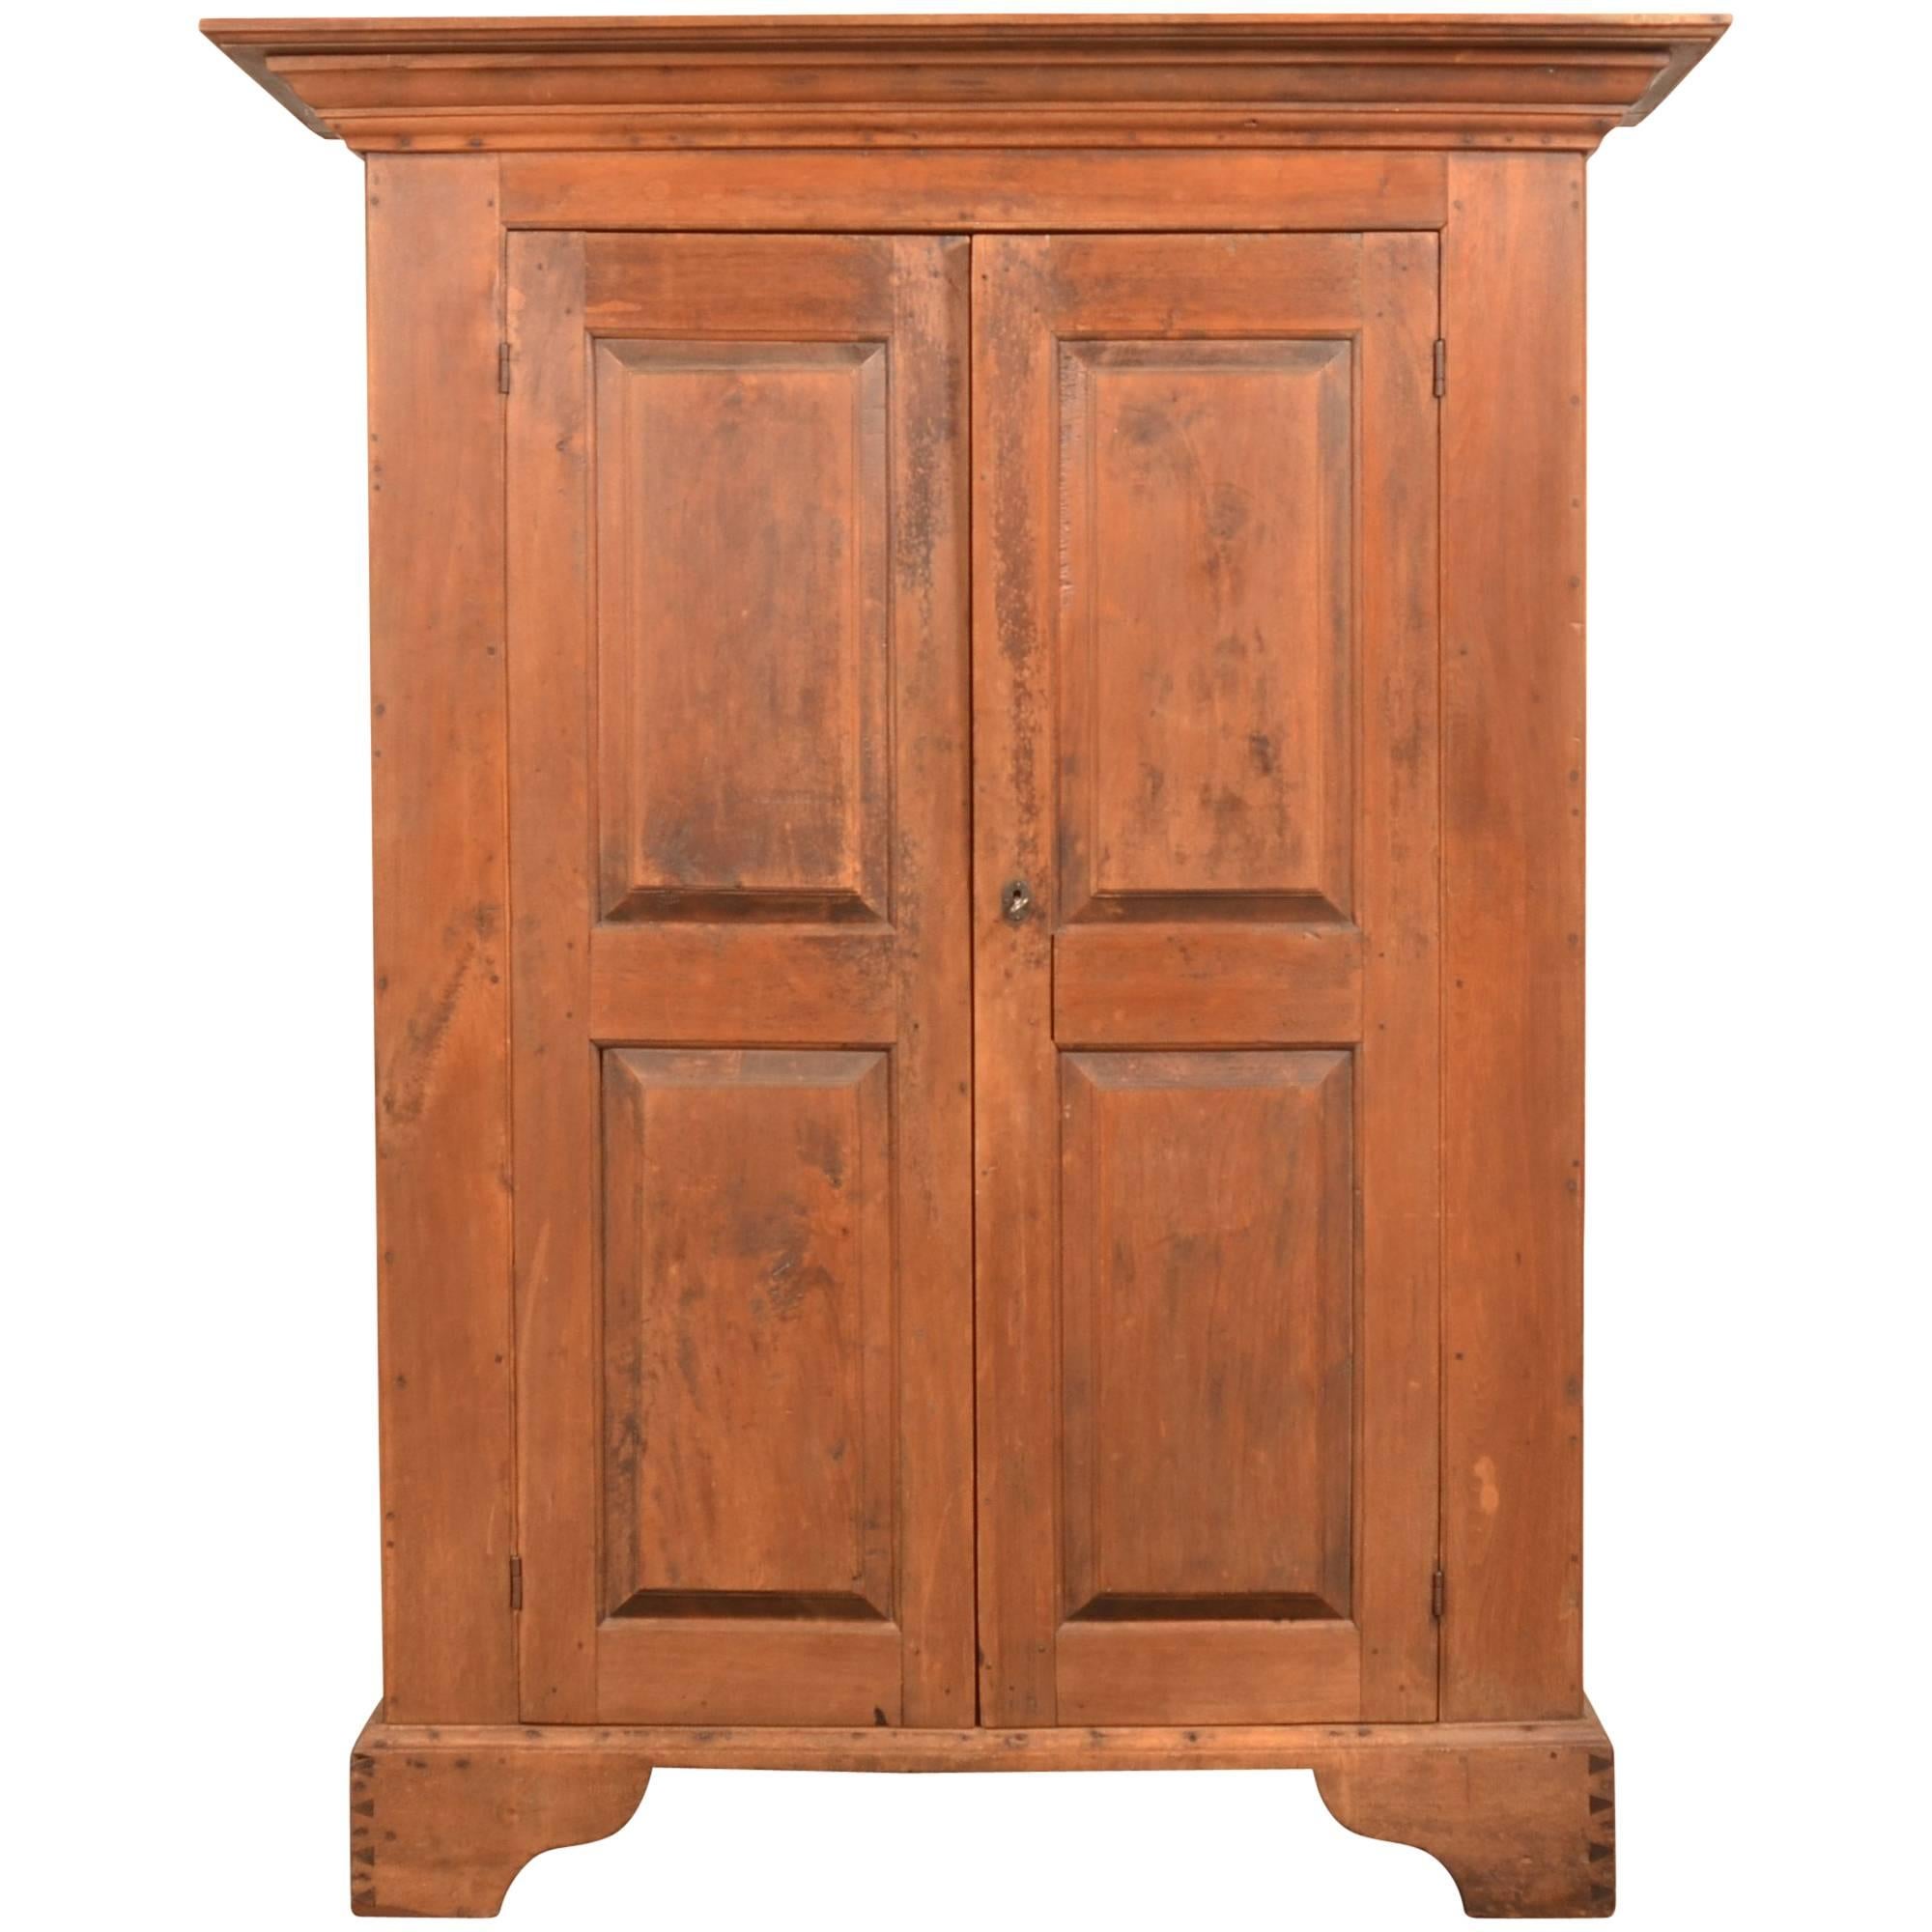 Queen Ann Pennsylvania Walnut kas Two Door Raised Panels, 18th Century  For Sale